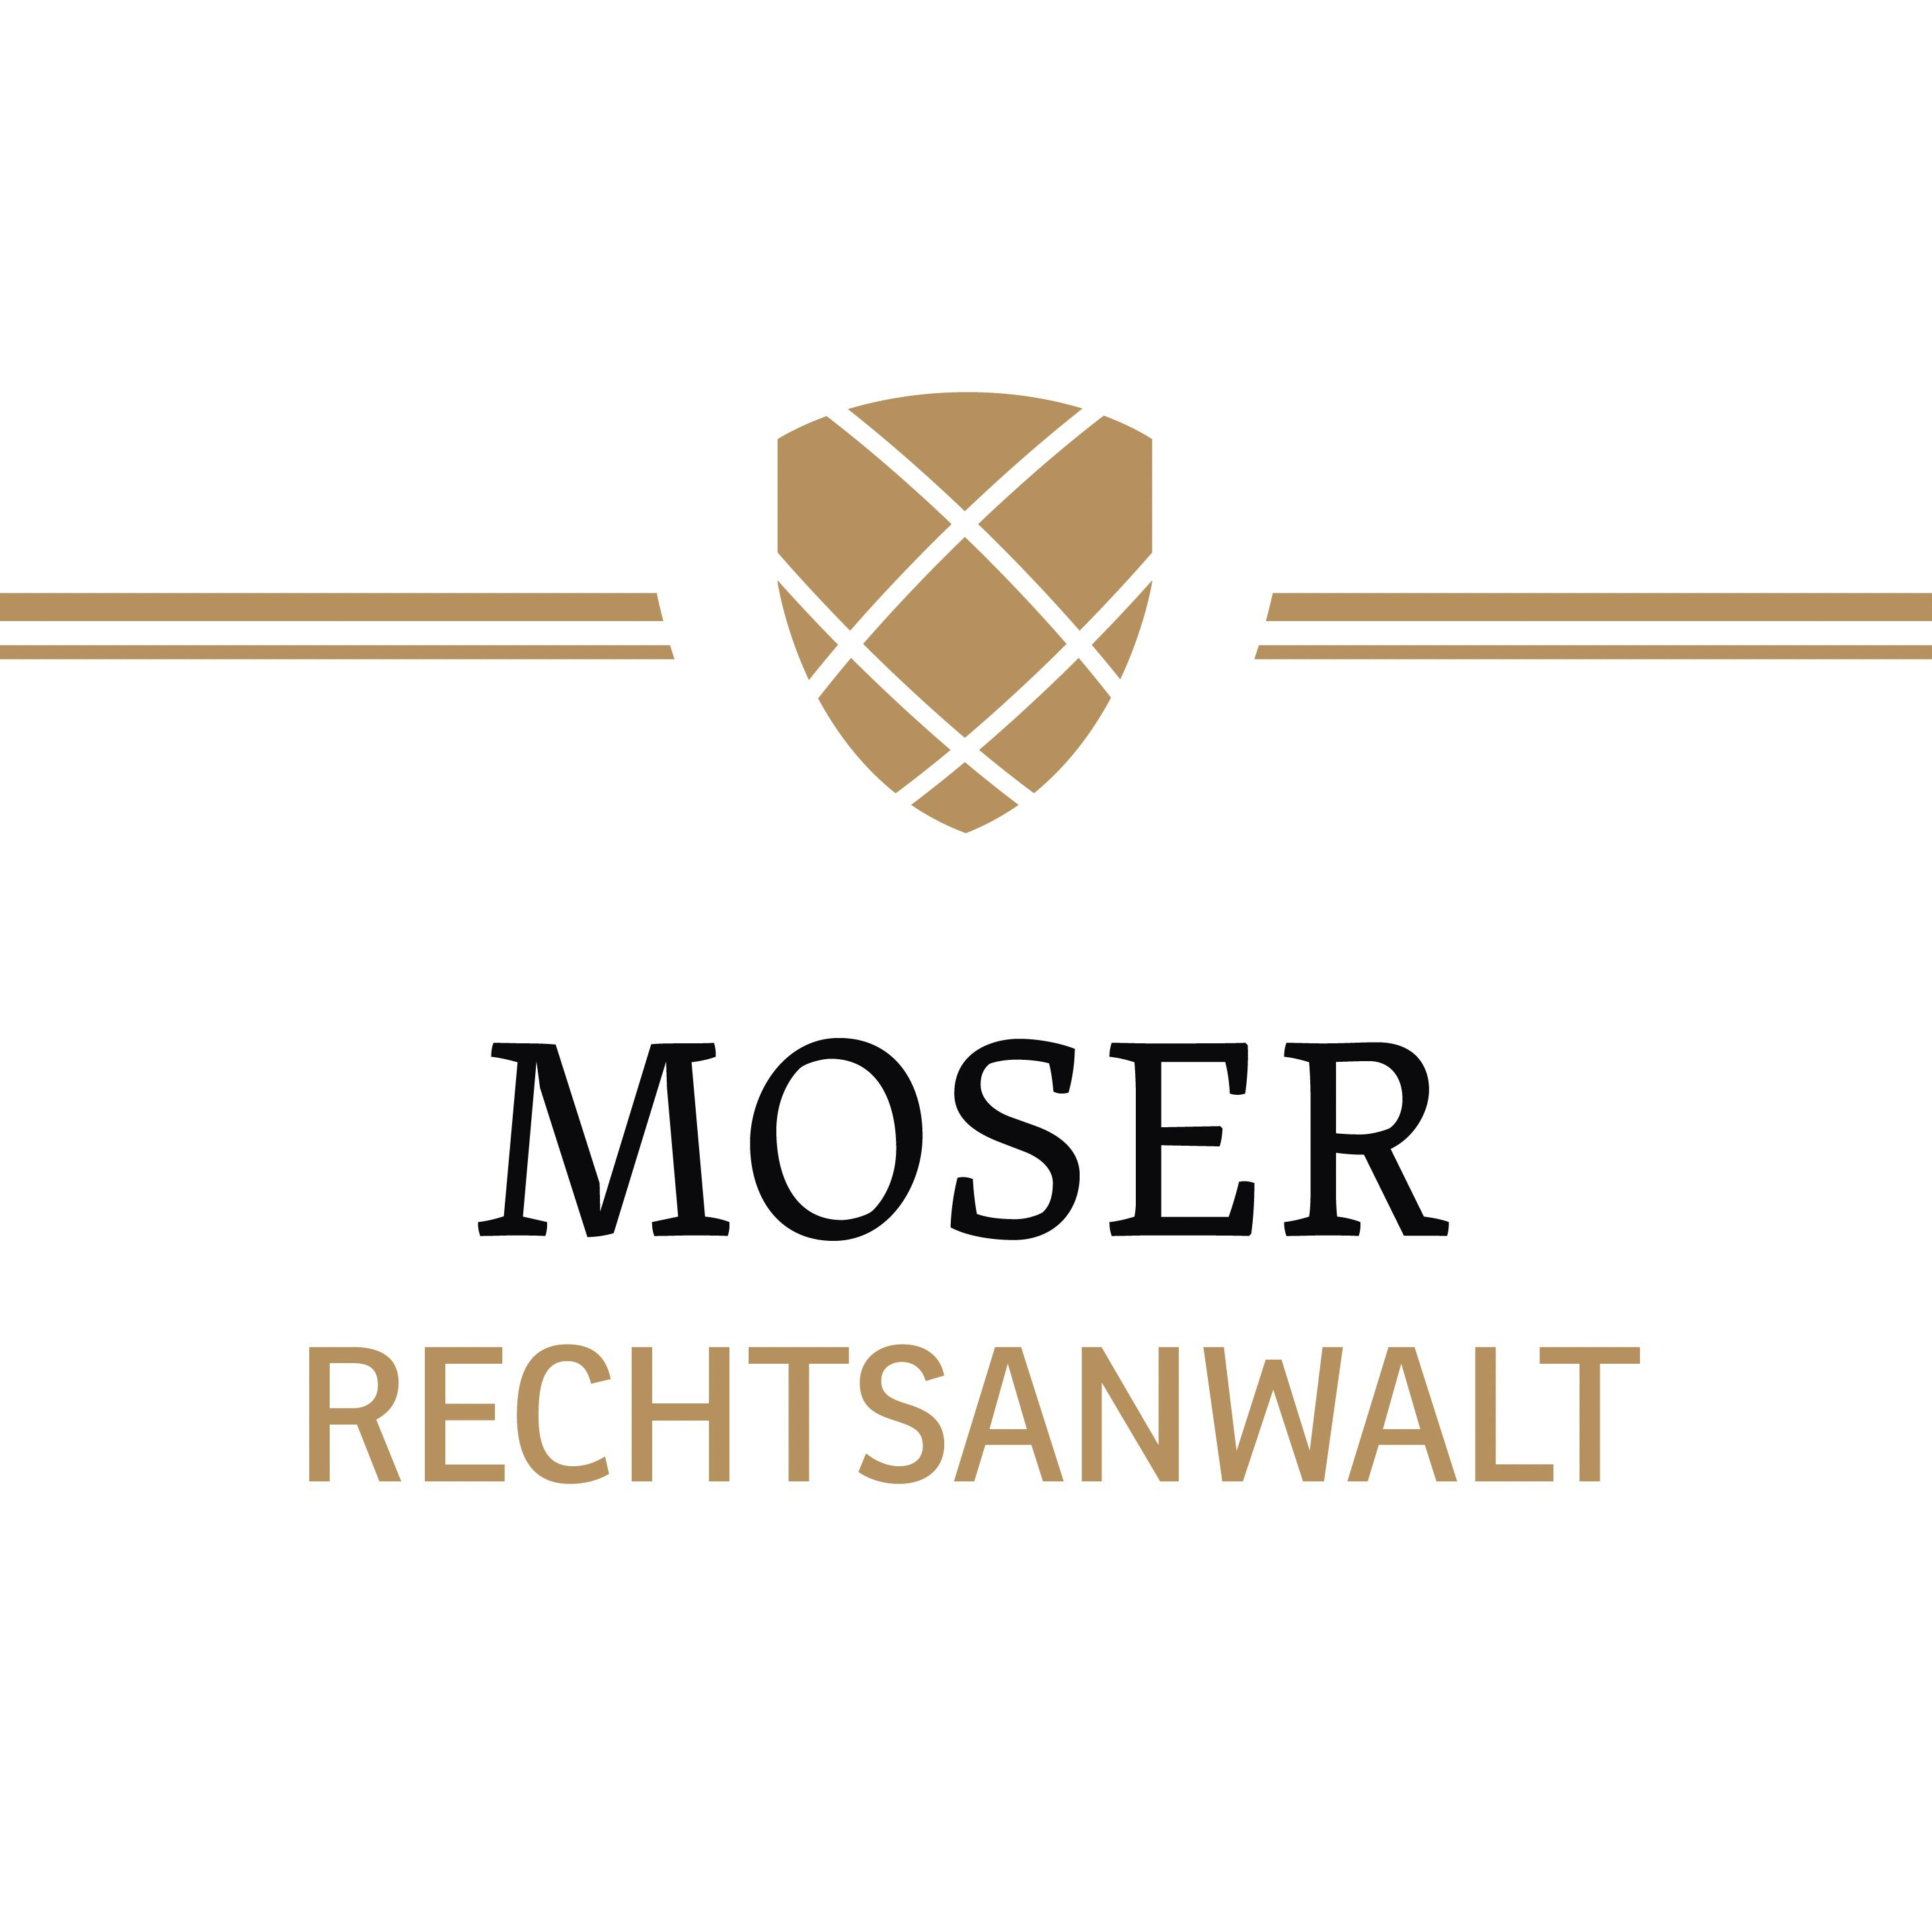 Moser Rechtsanwalt in Karlsruhe - Logo